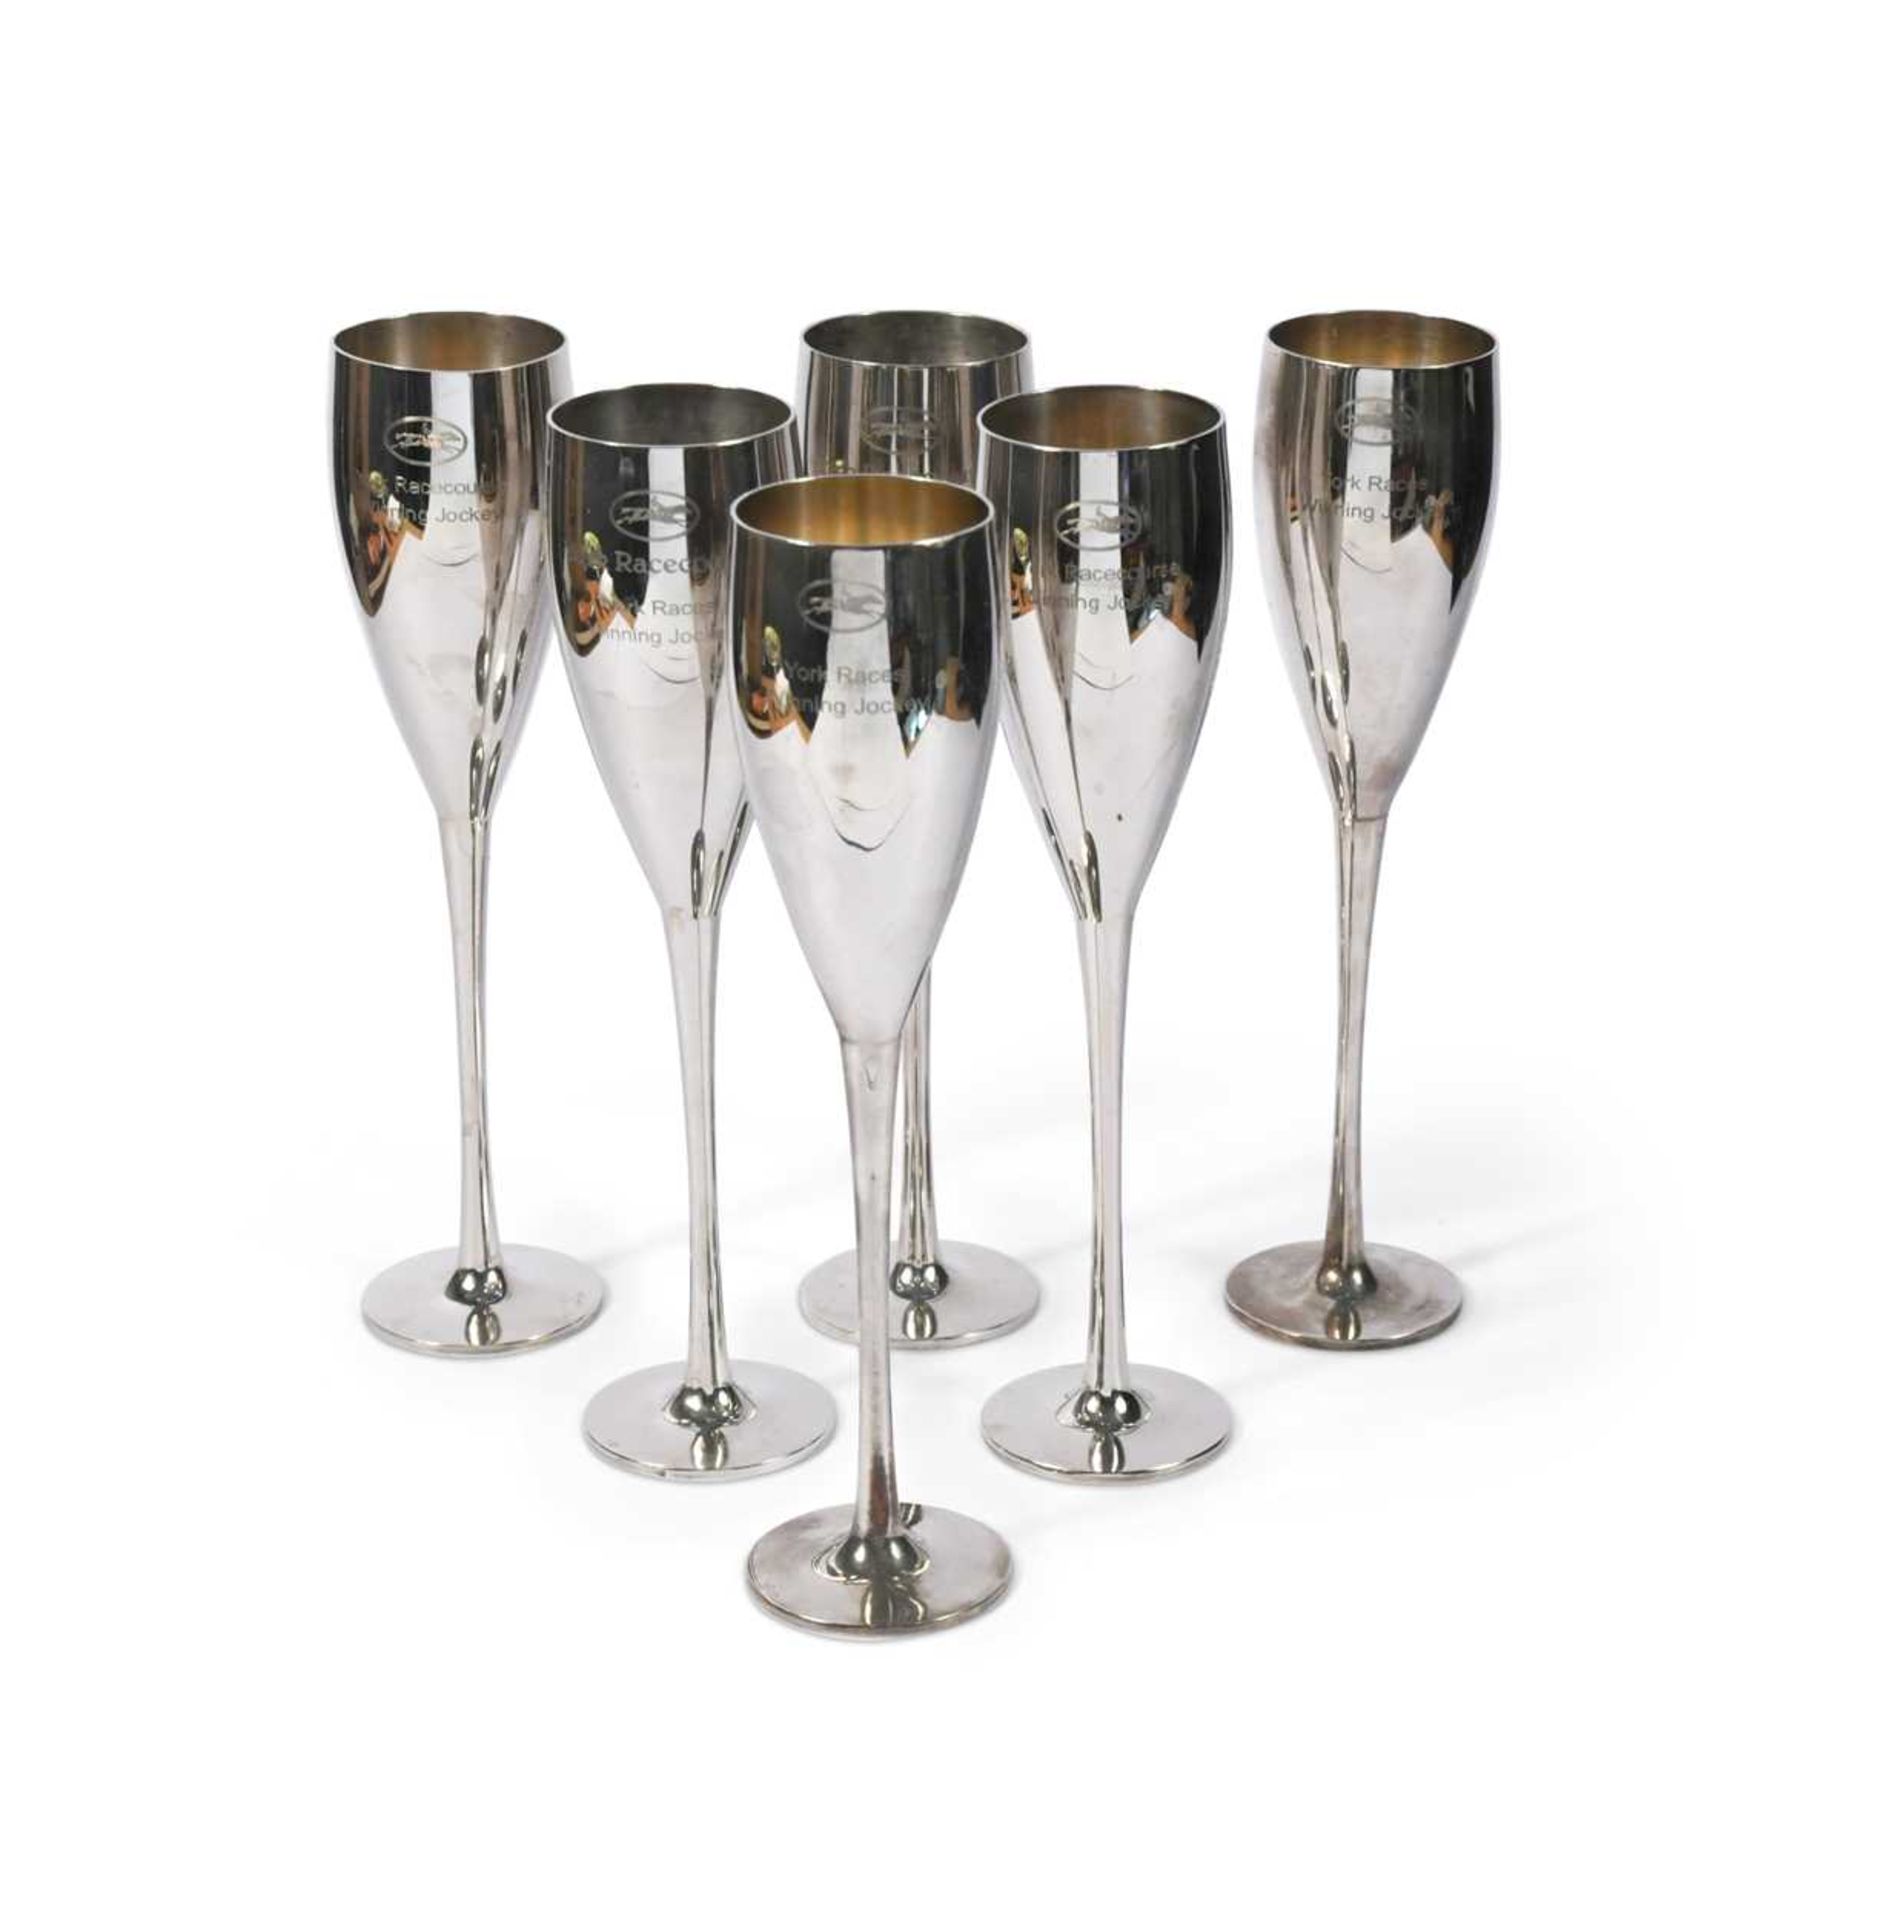 A set of six Thomas Lyte champagne flutes, awarded to Frankie Dettori,